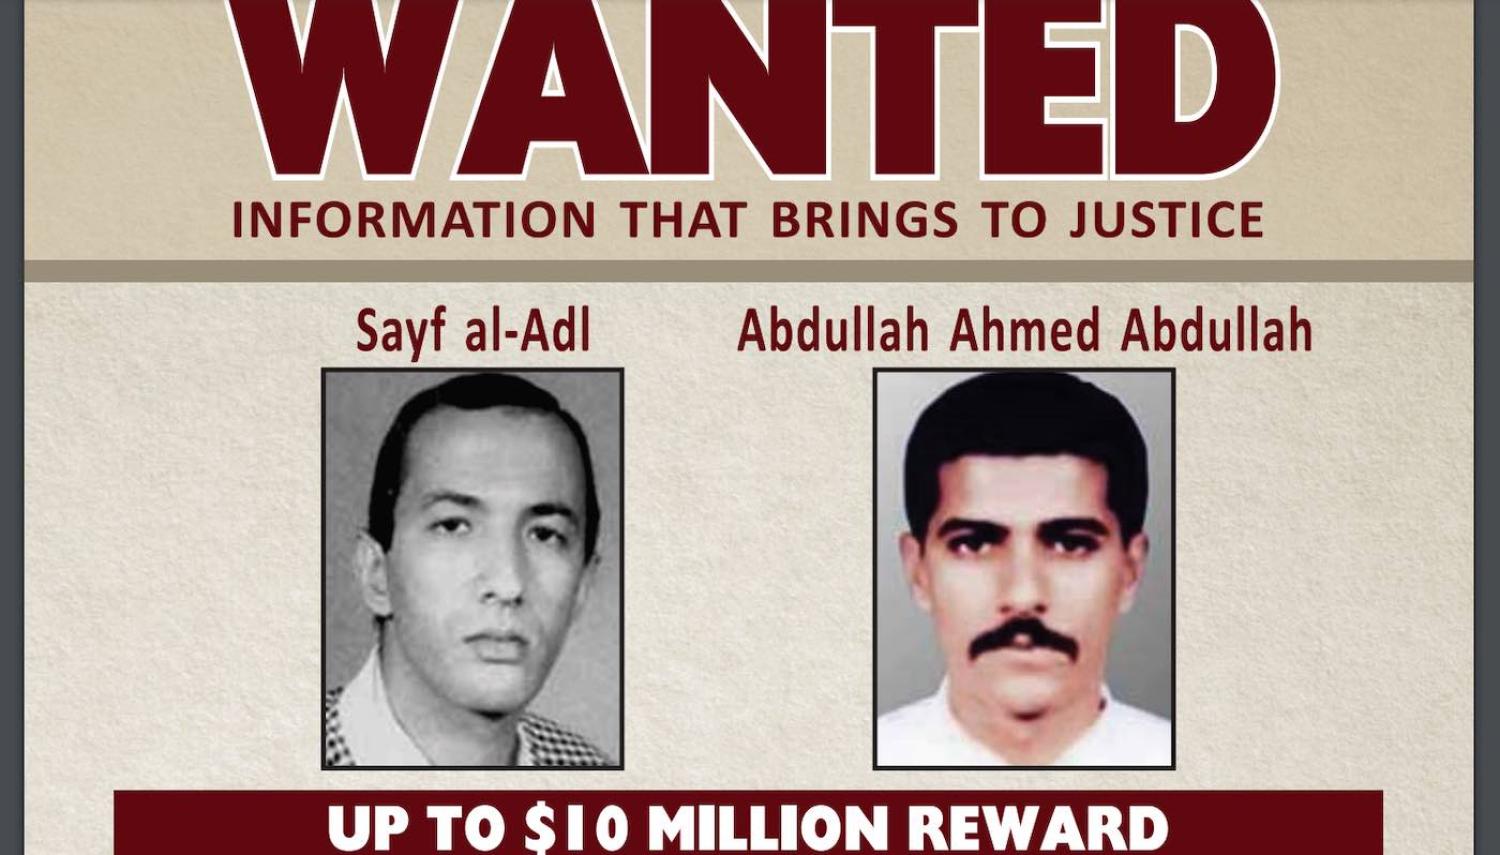 Wanted posters for senior al Qaeda leaders Abu Mohammed al-Masri – AKA Abdullah Ahmed Abdullah – and Saif al Adel (rewardsforjustice.net)